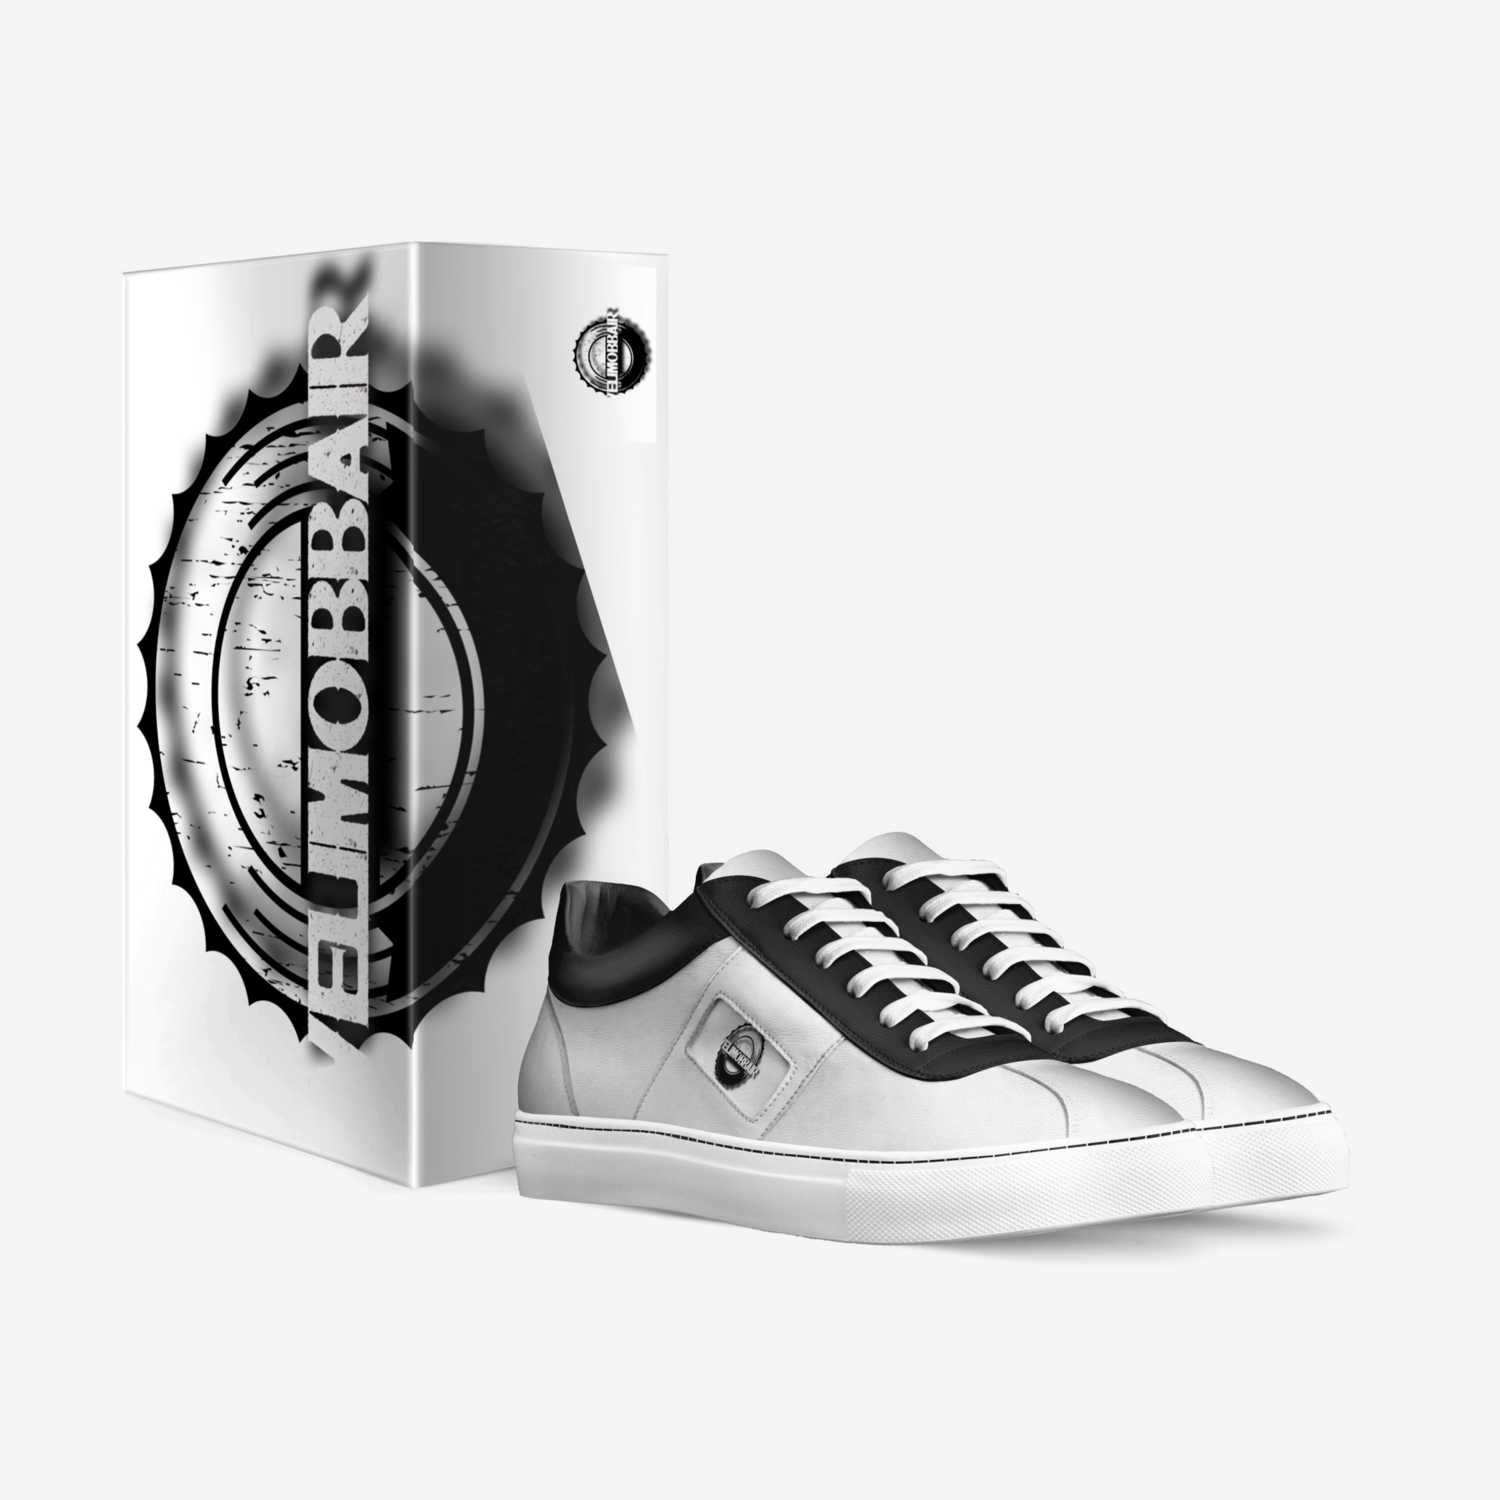 VeliMobbAir custom made in Italy shoes by Trapveli Empire | Box view